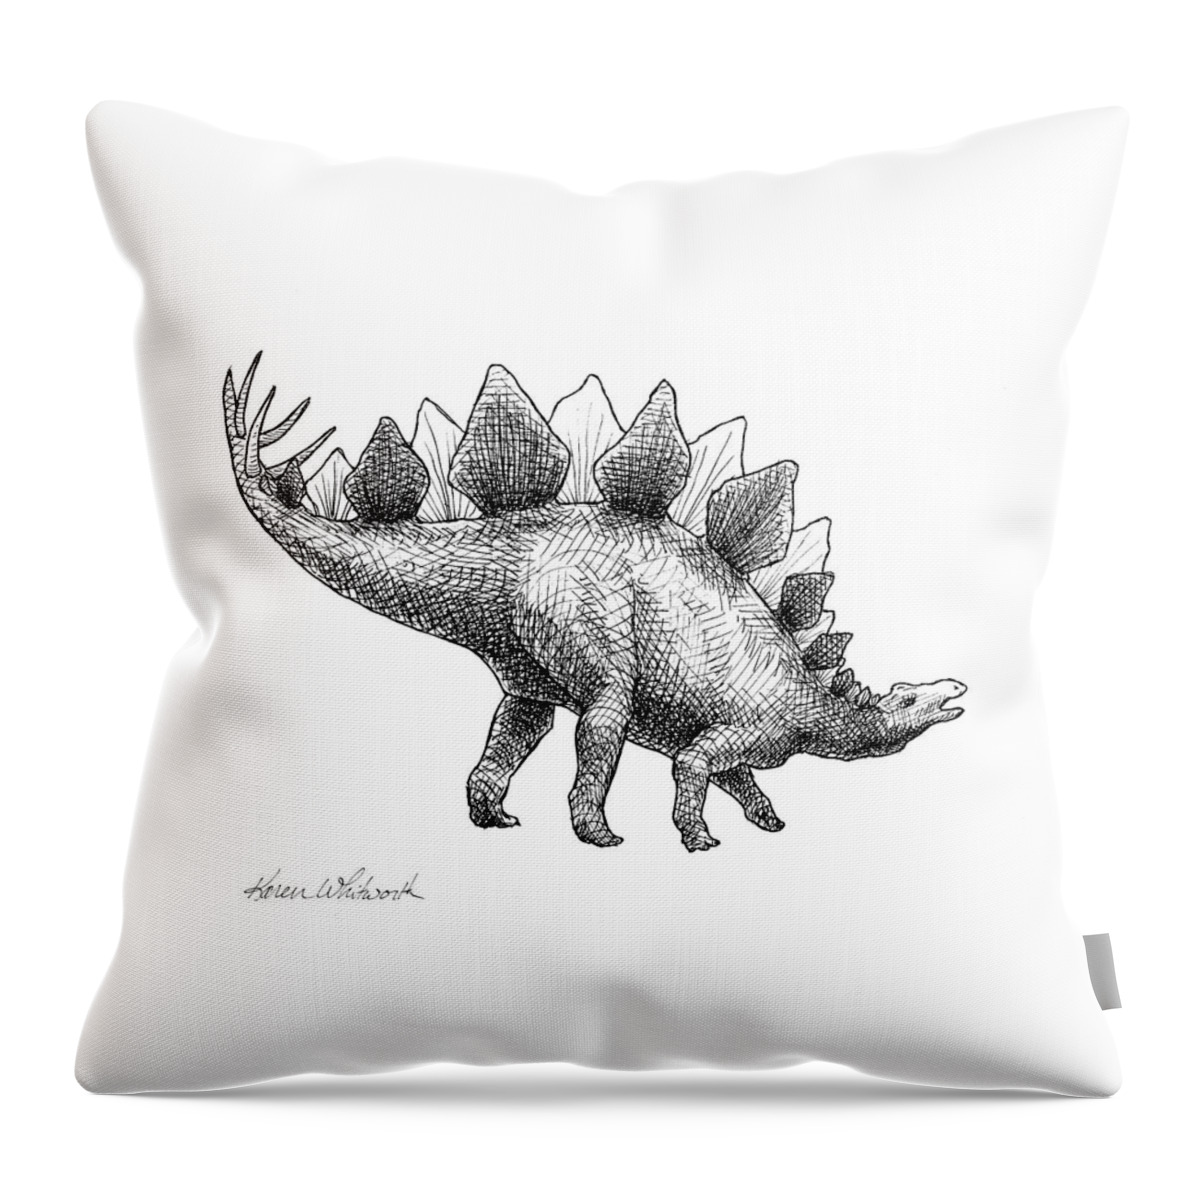 Dinosaur Decor Throw Pillow featuring the drawing Stegosaurus - Dinosaur Decor - Black and White Dino Drawing by K Whitworth